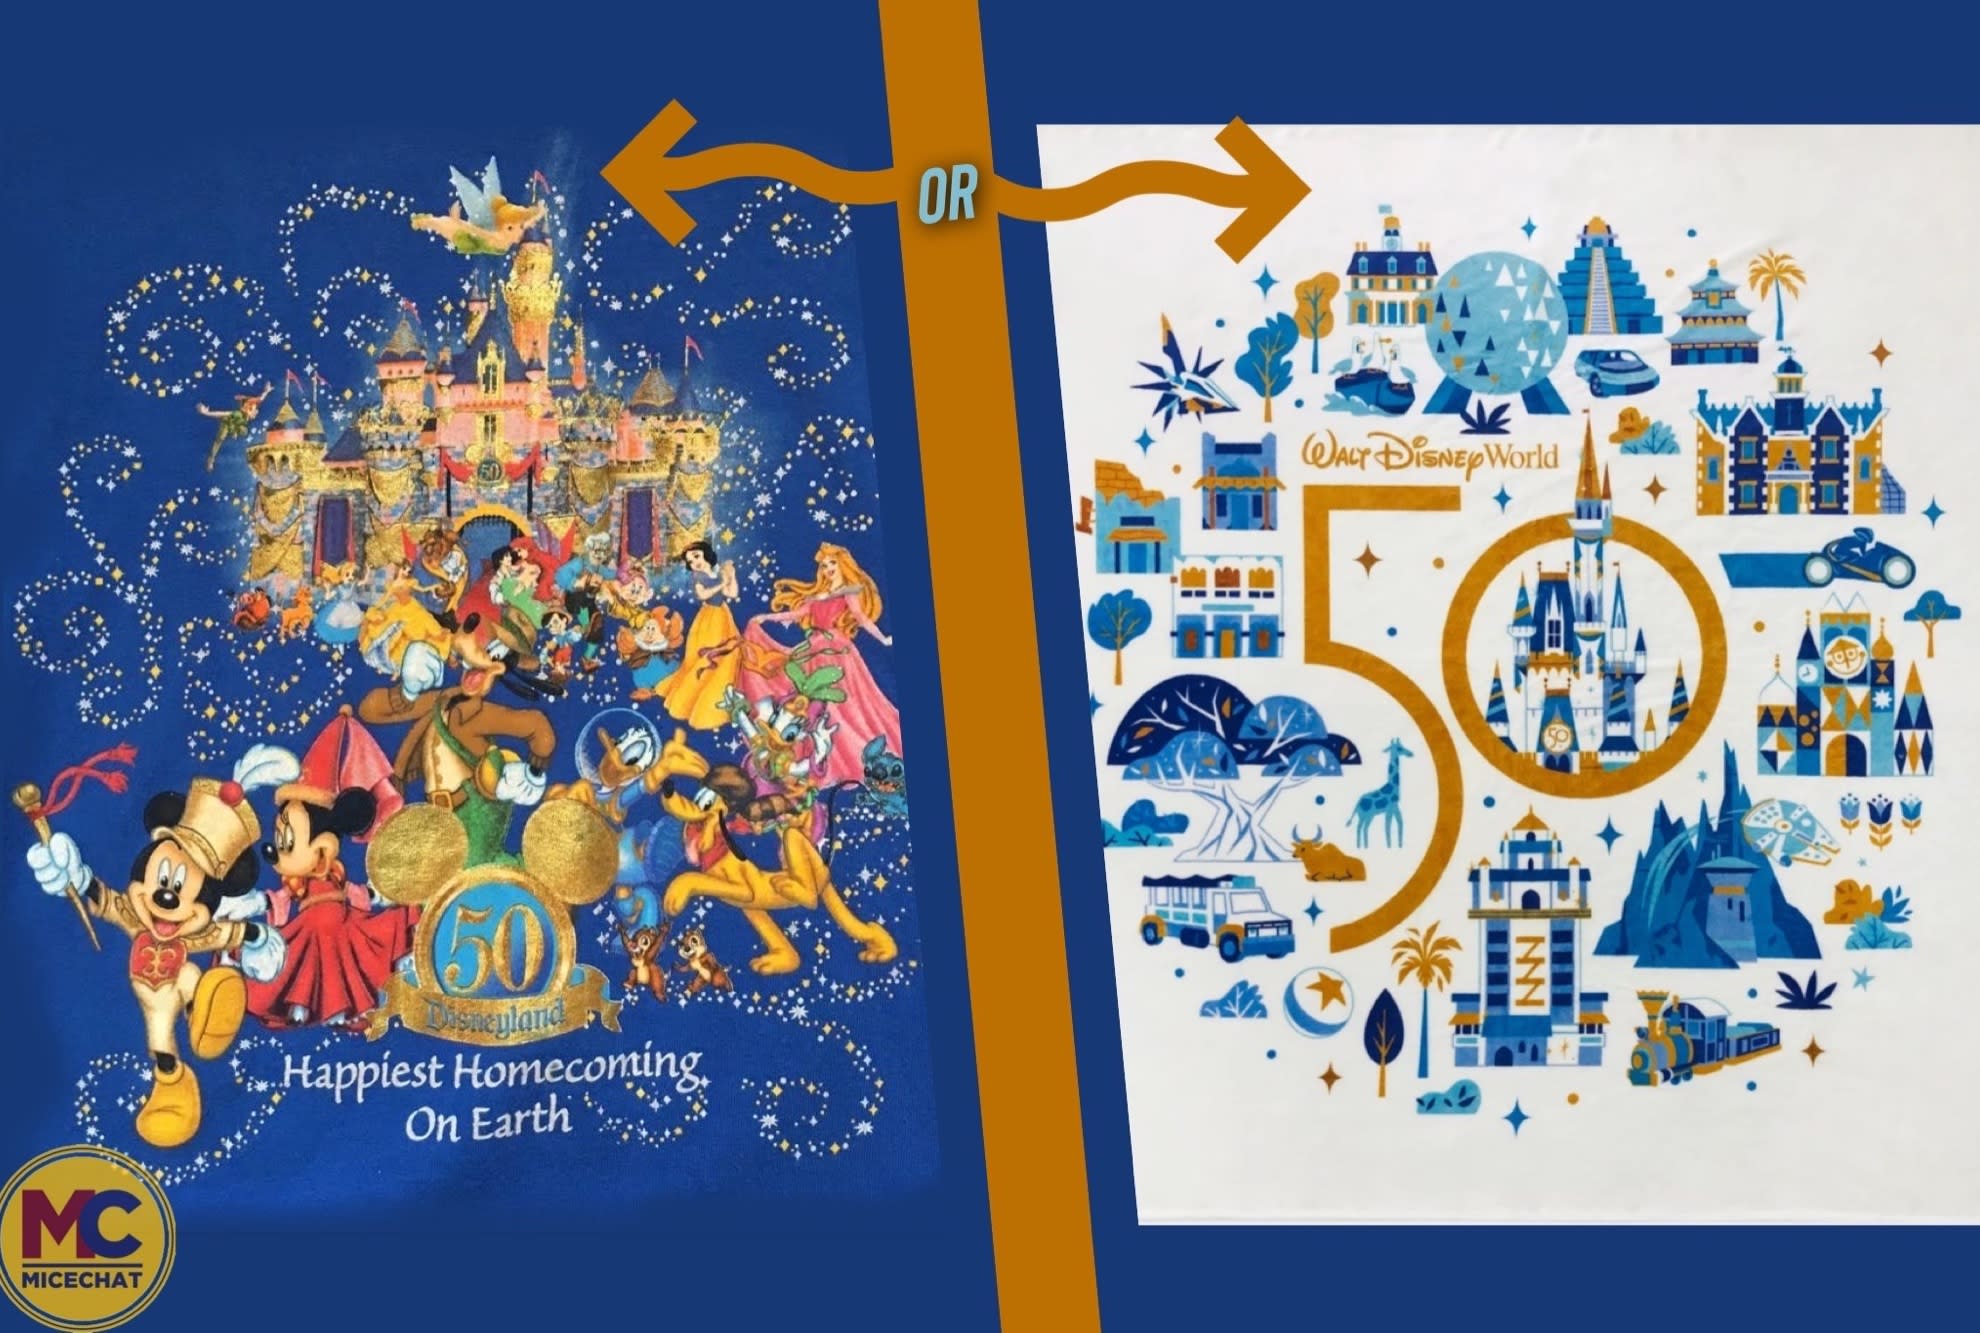 Who Did the Best 50th Anniversary? Disneyland Vs. Walt Disney World